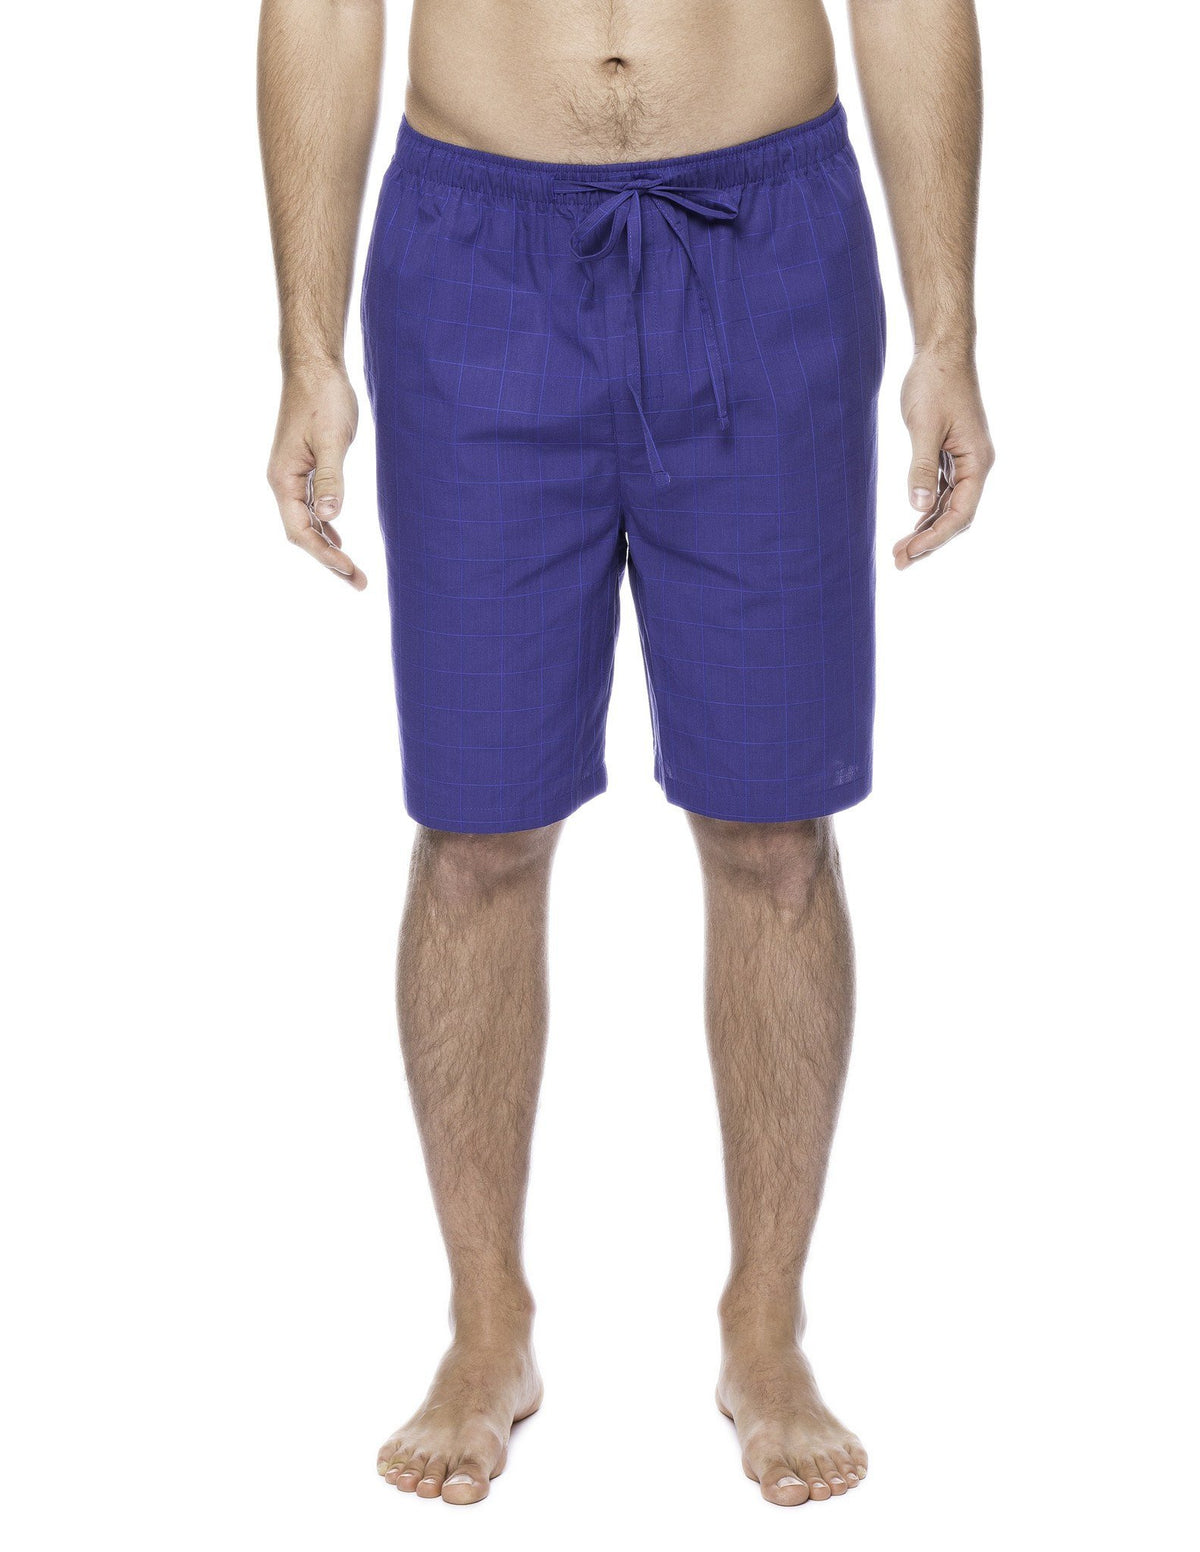 Men's 100% Woven Cotton Lounge Shorts - Windowpane Checks Blue